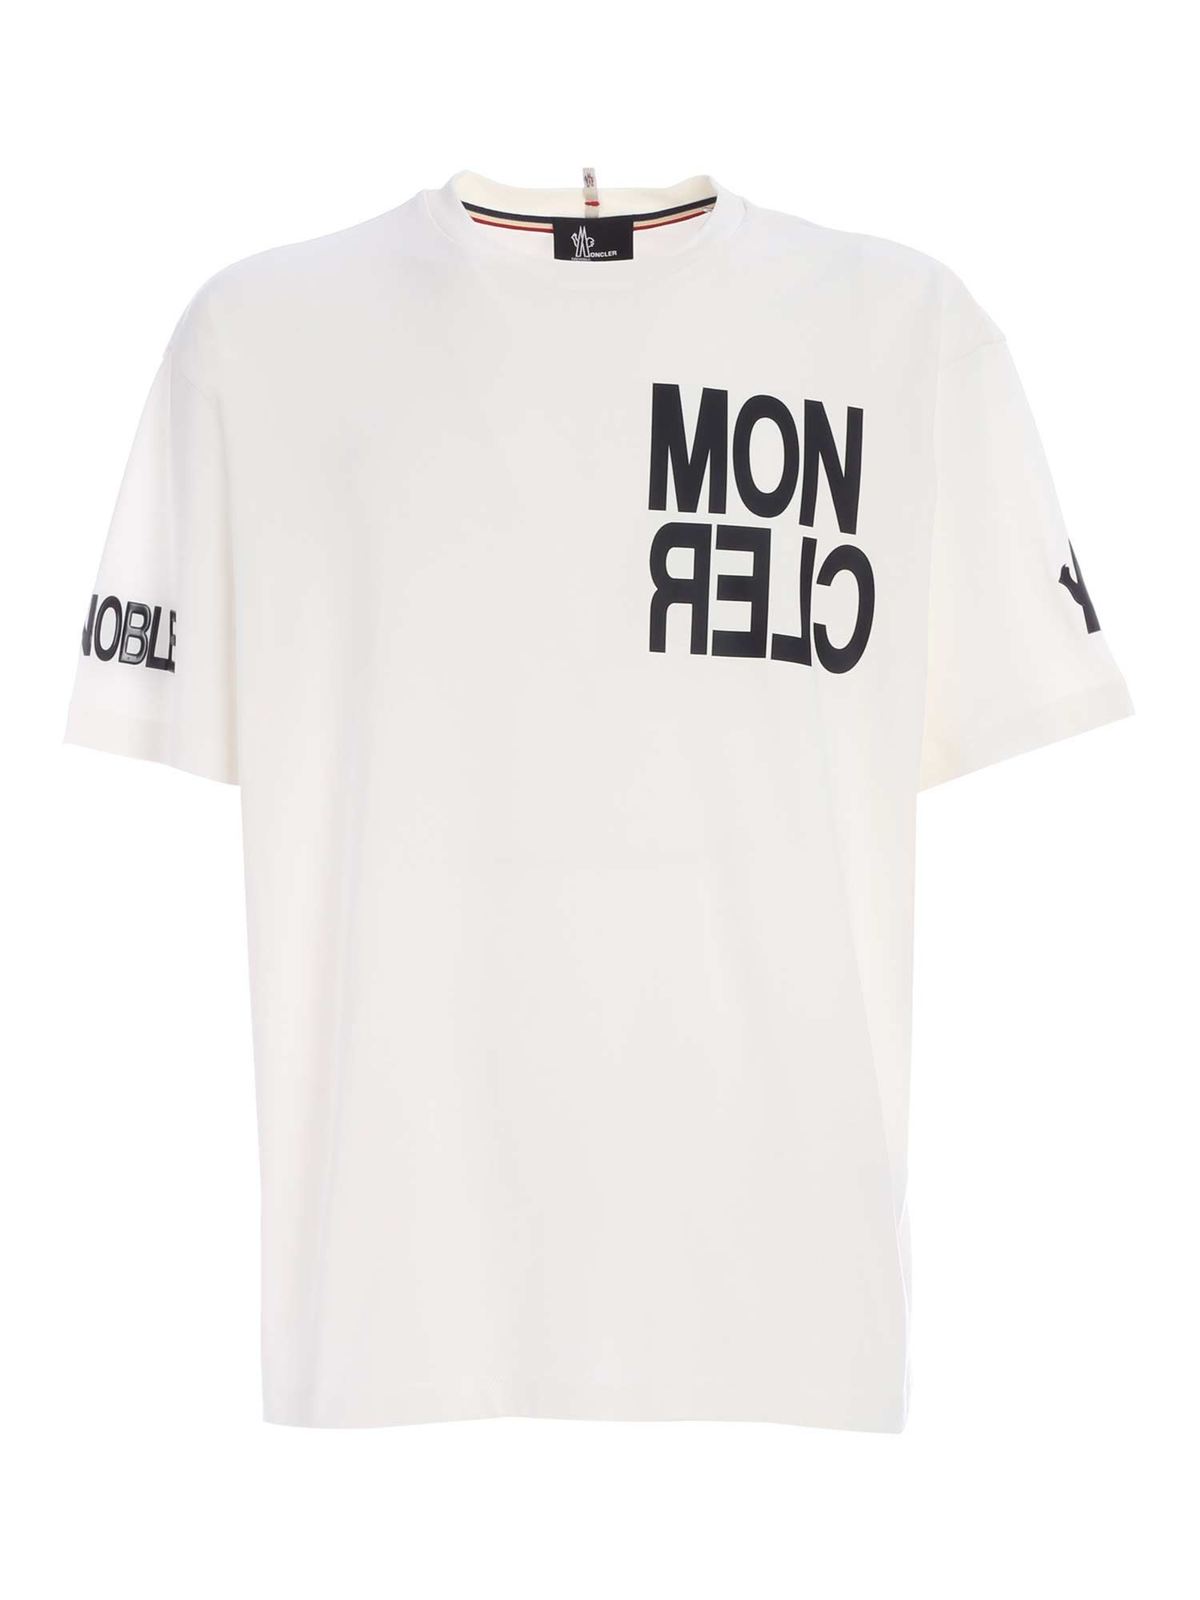 Tシャツ Moncler Grenoble - Tシャツ - 白 - 8C705208390T034